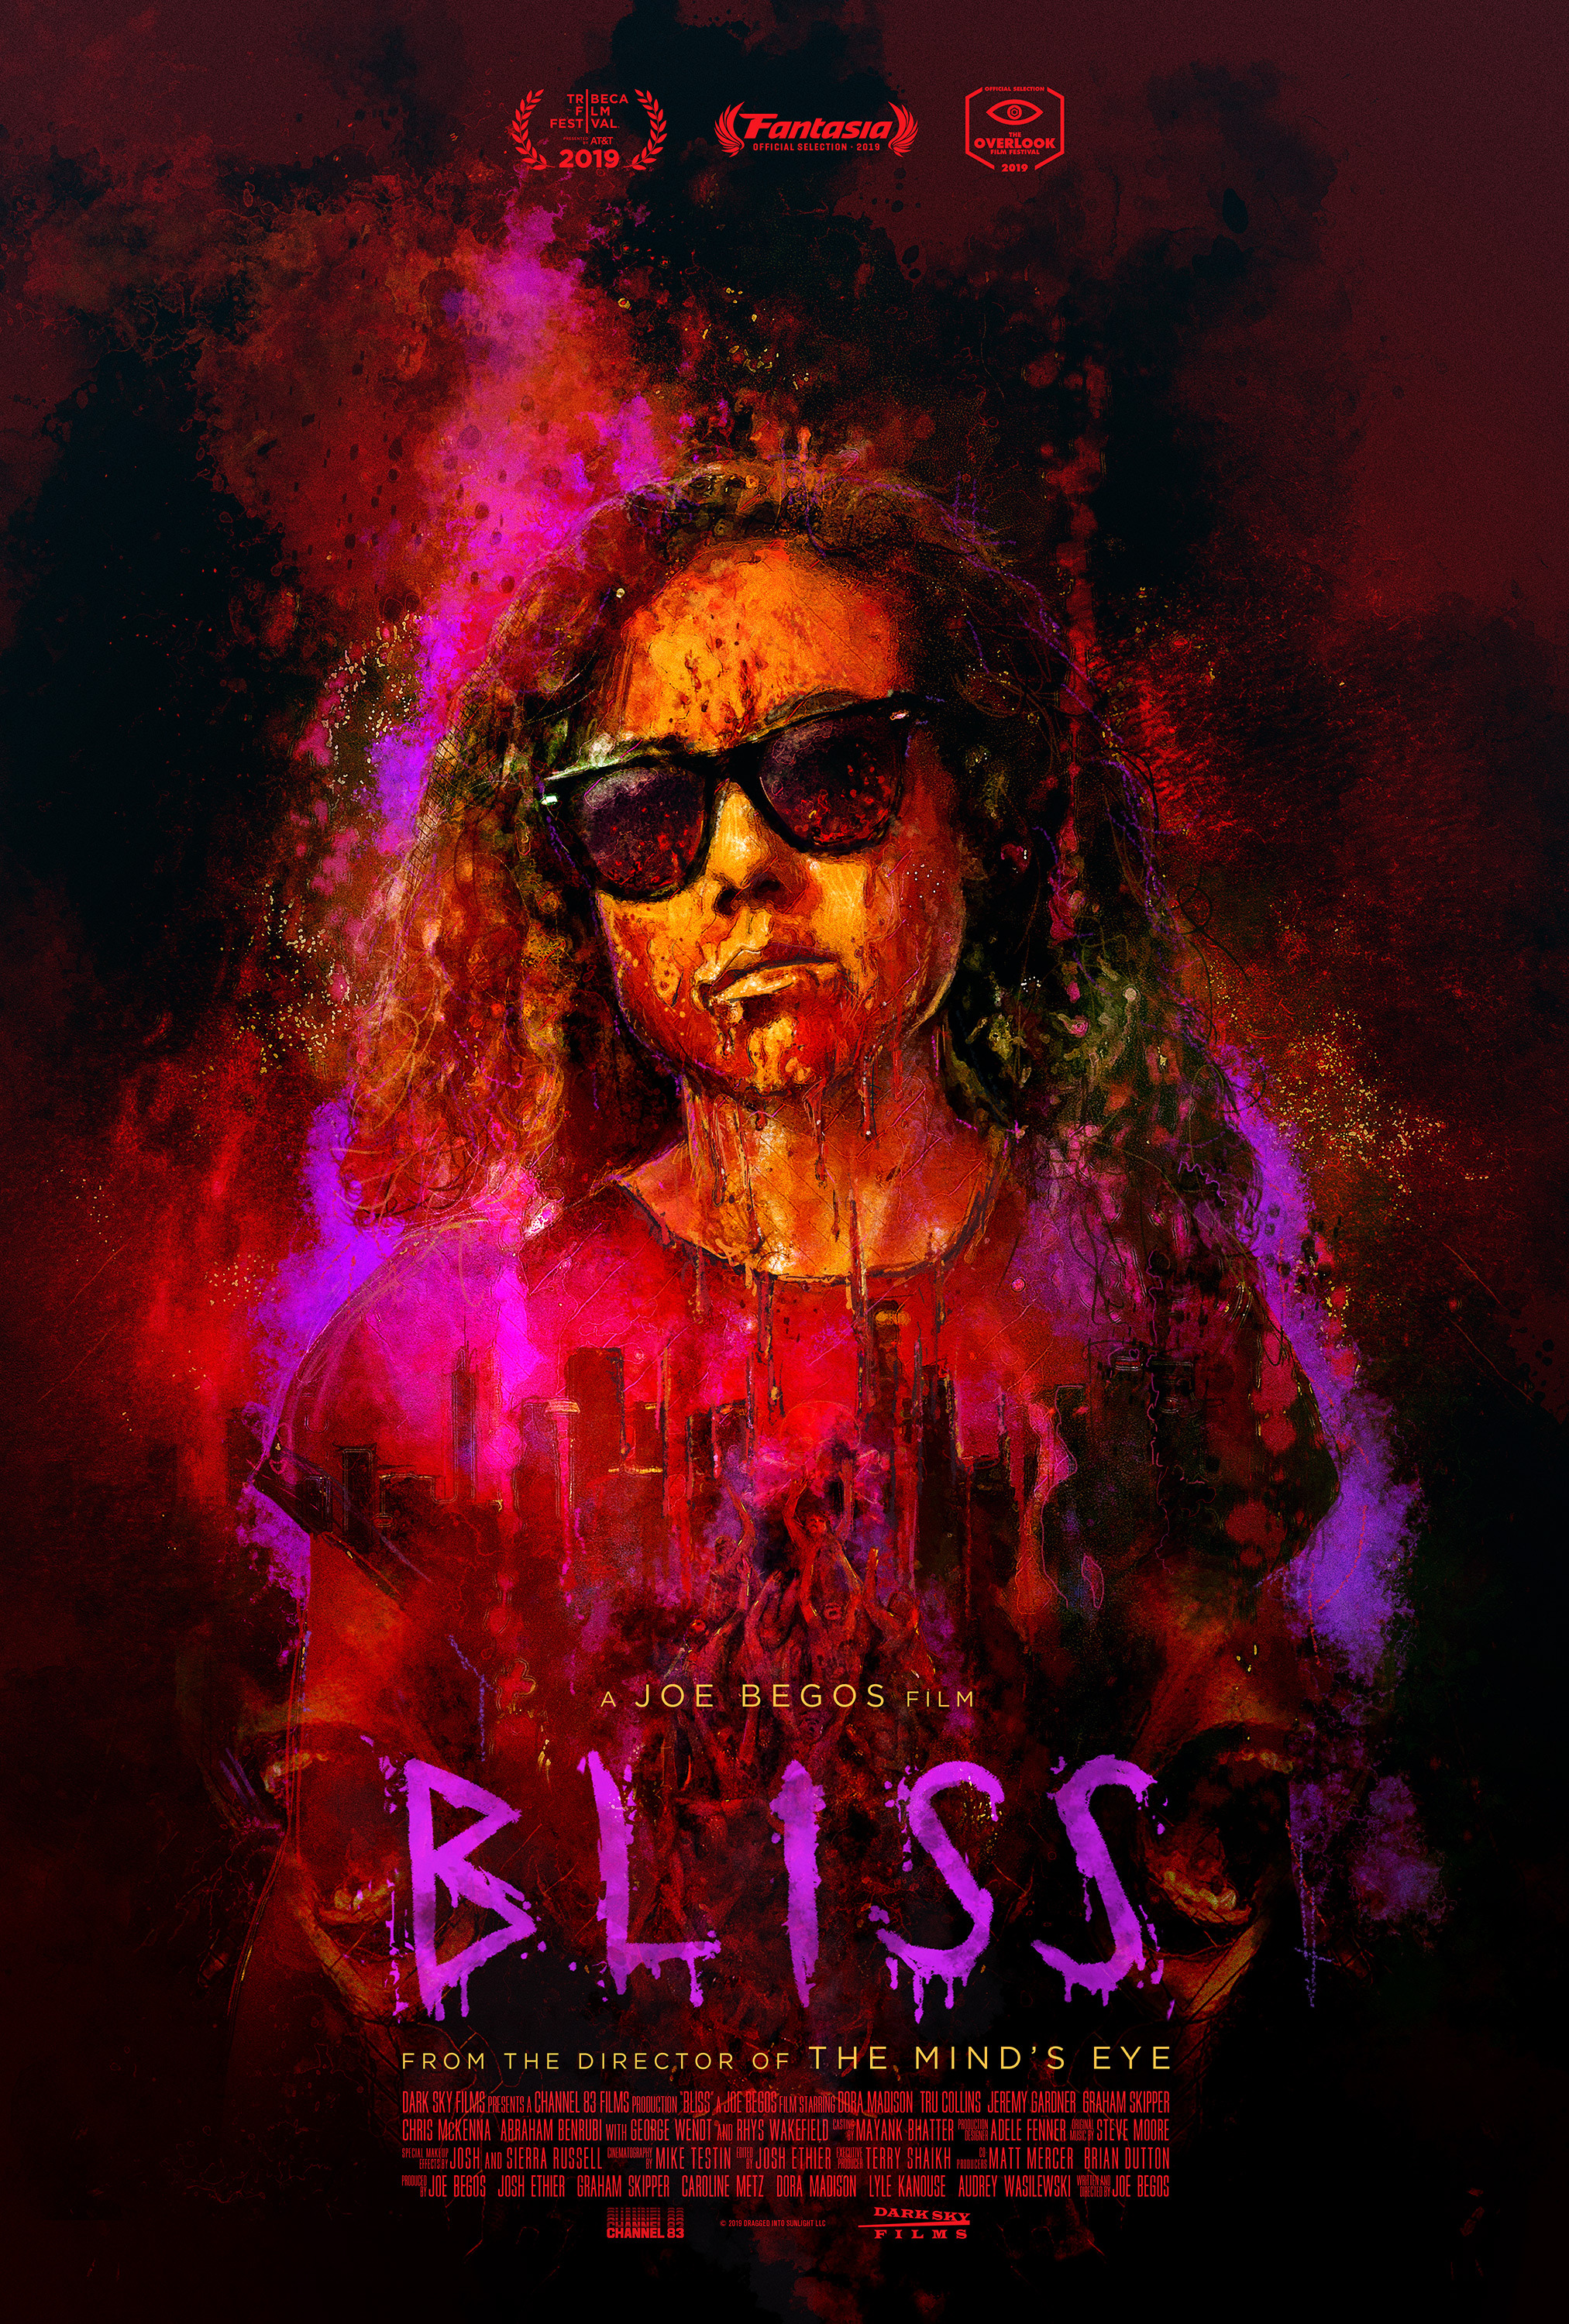 Mega Sized Movie Poster Image for Bliss 